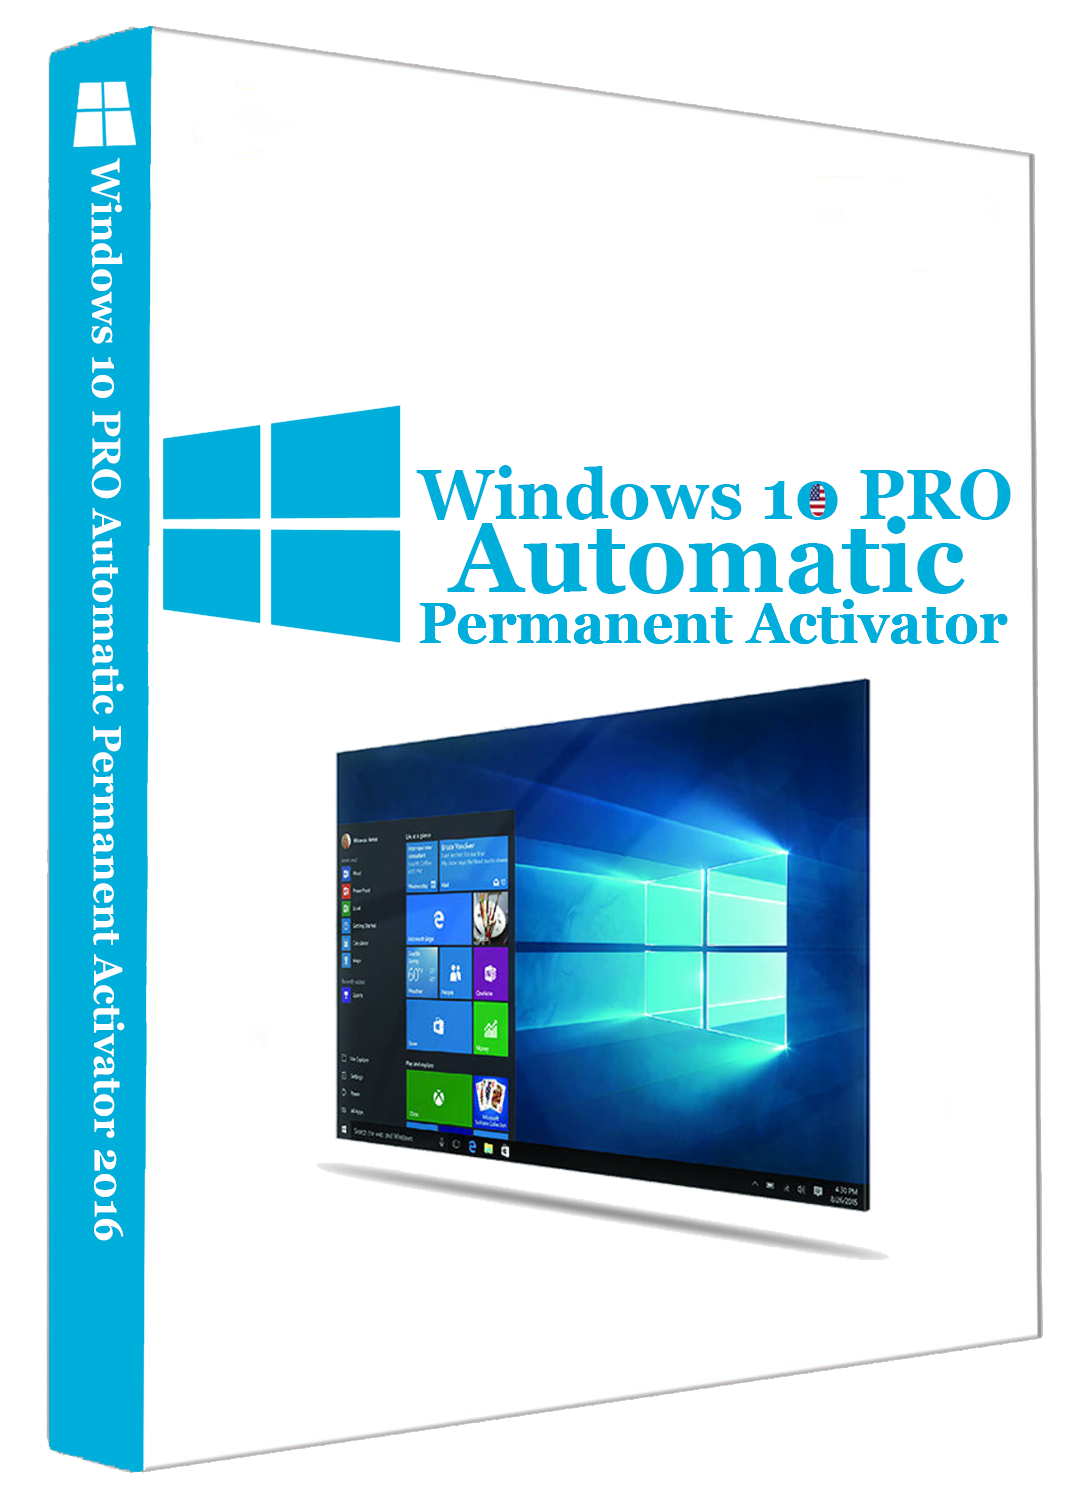 Windows 10 PRO Automatic Permanent Activator v1.0